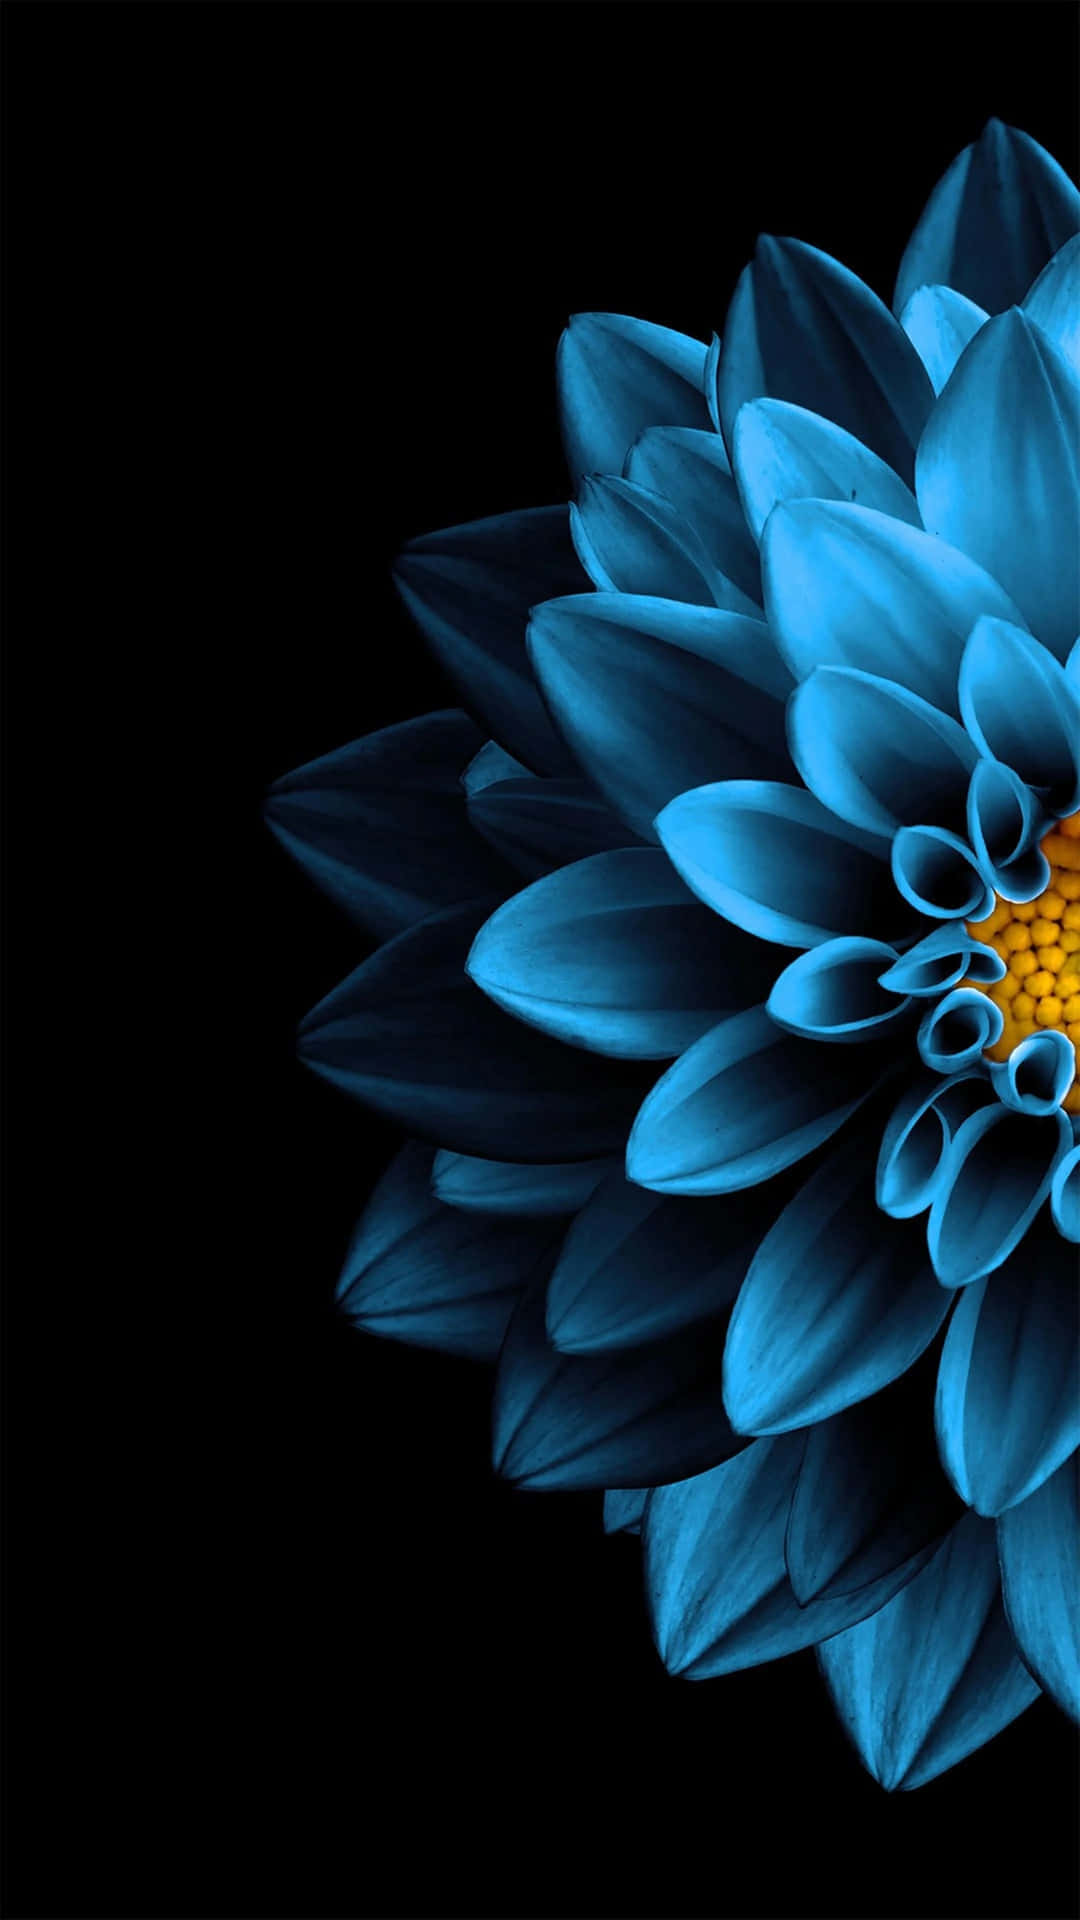 A Blue Flower On A Black Background